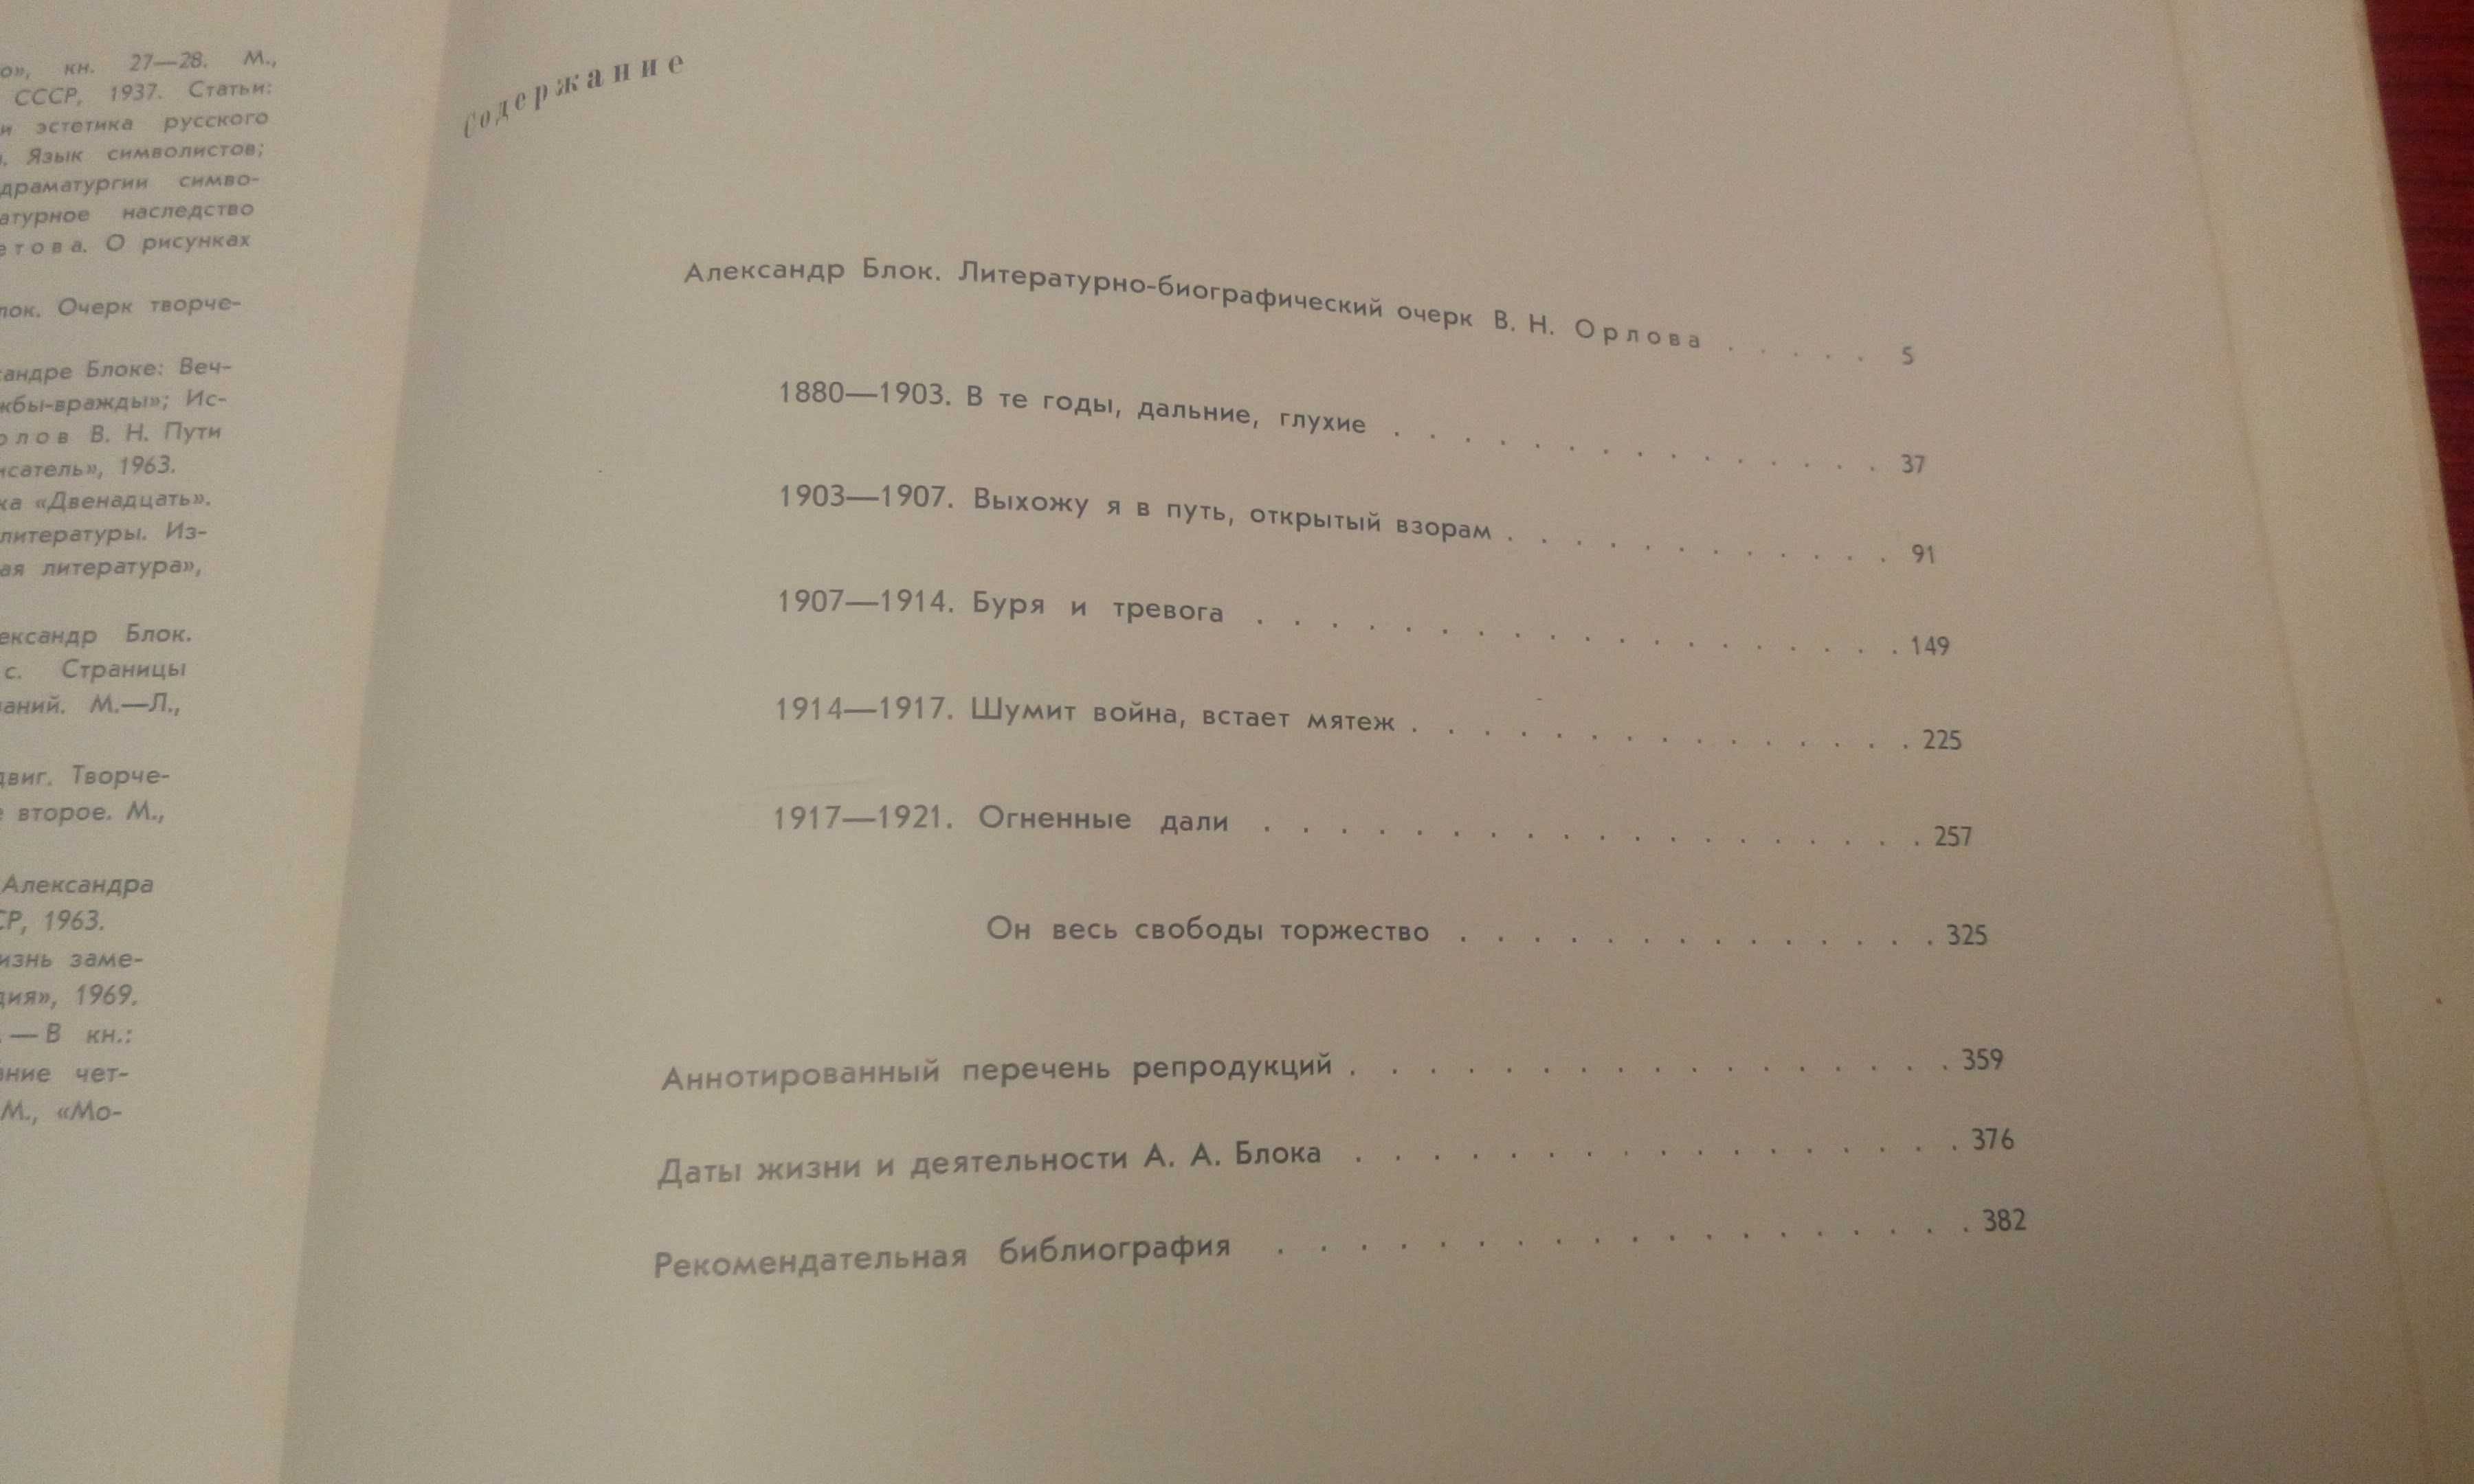 Александр Блок в портретах, иллюстрациях и документах. 1972г.